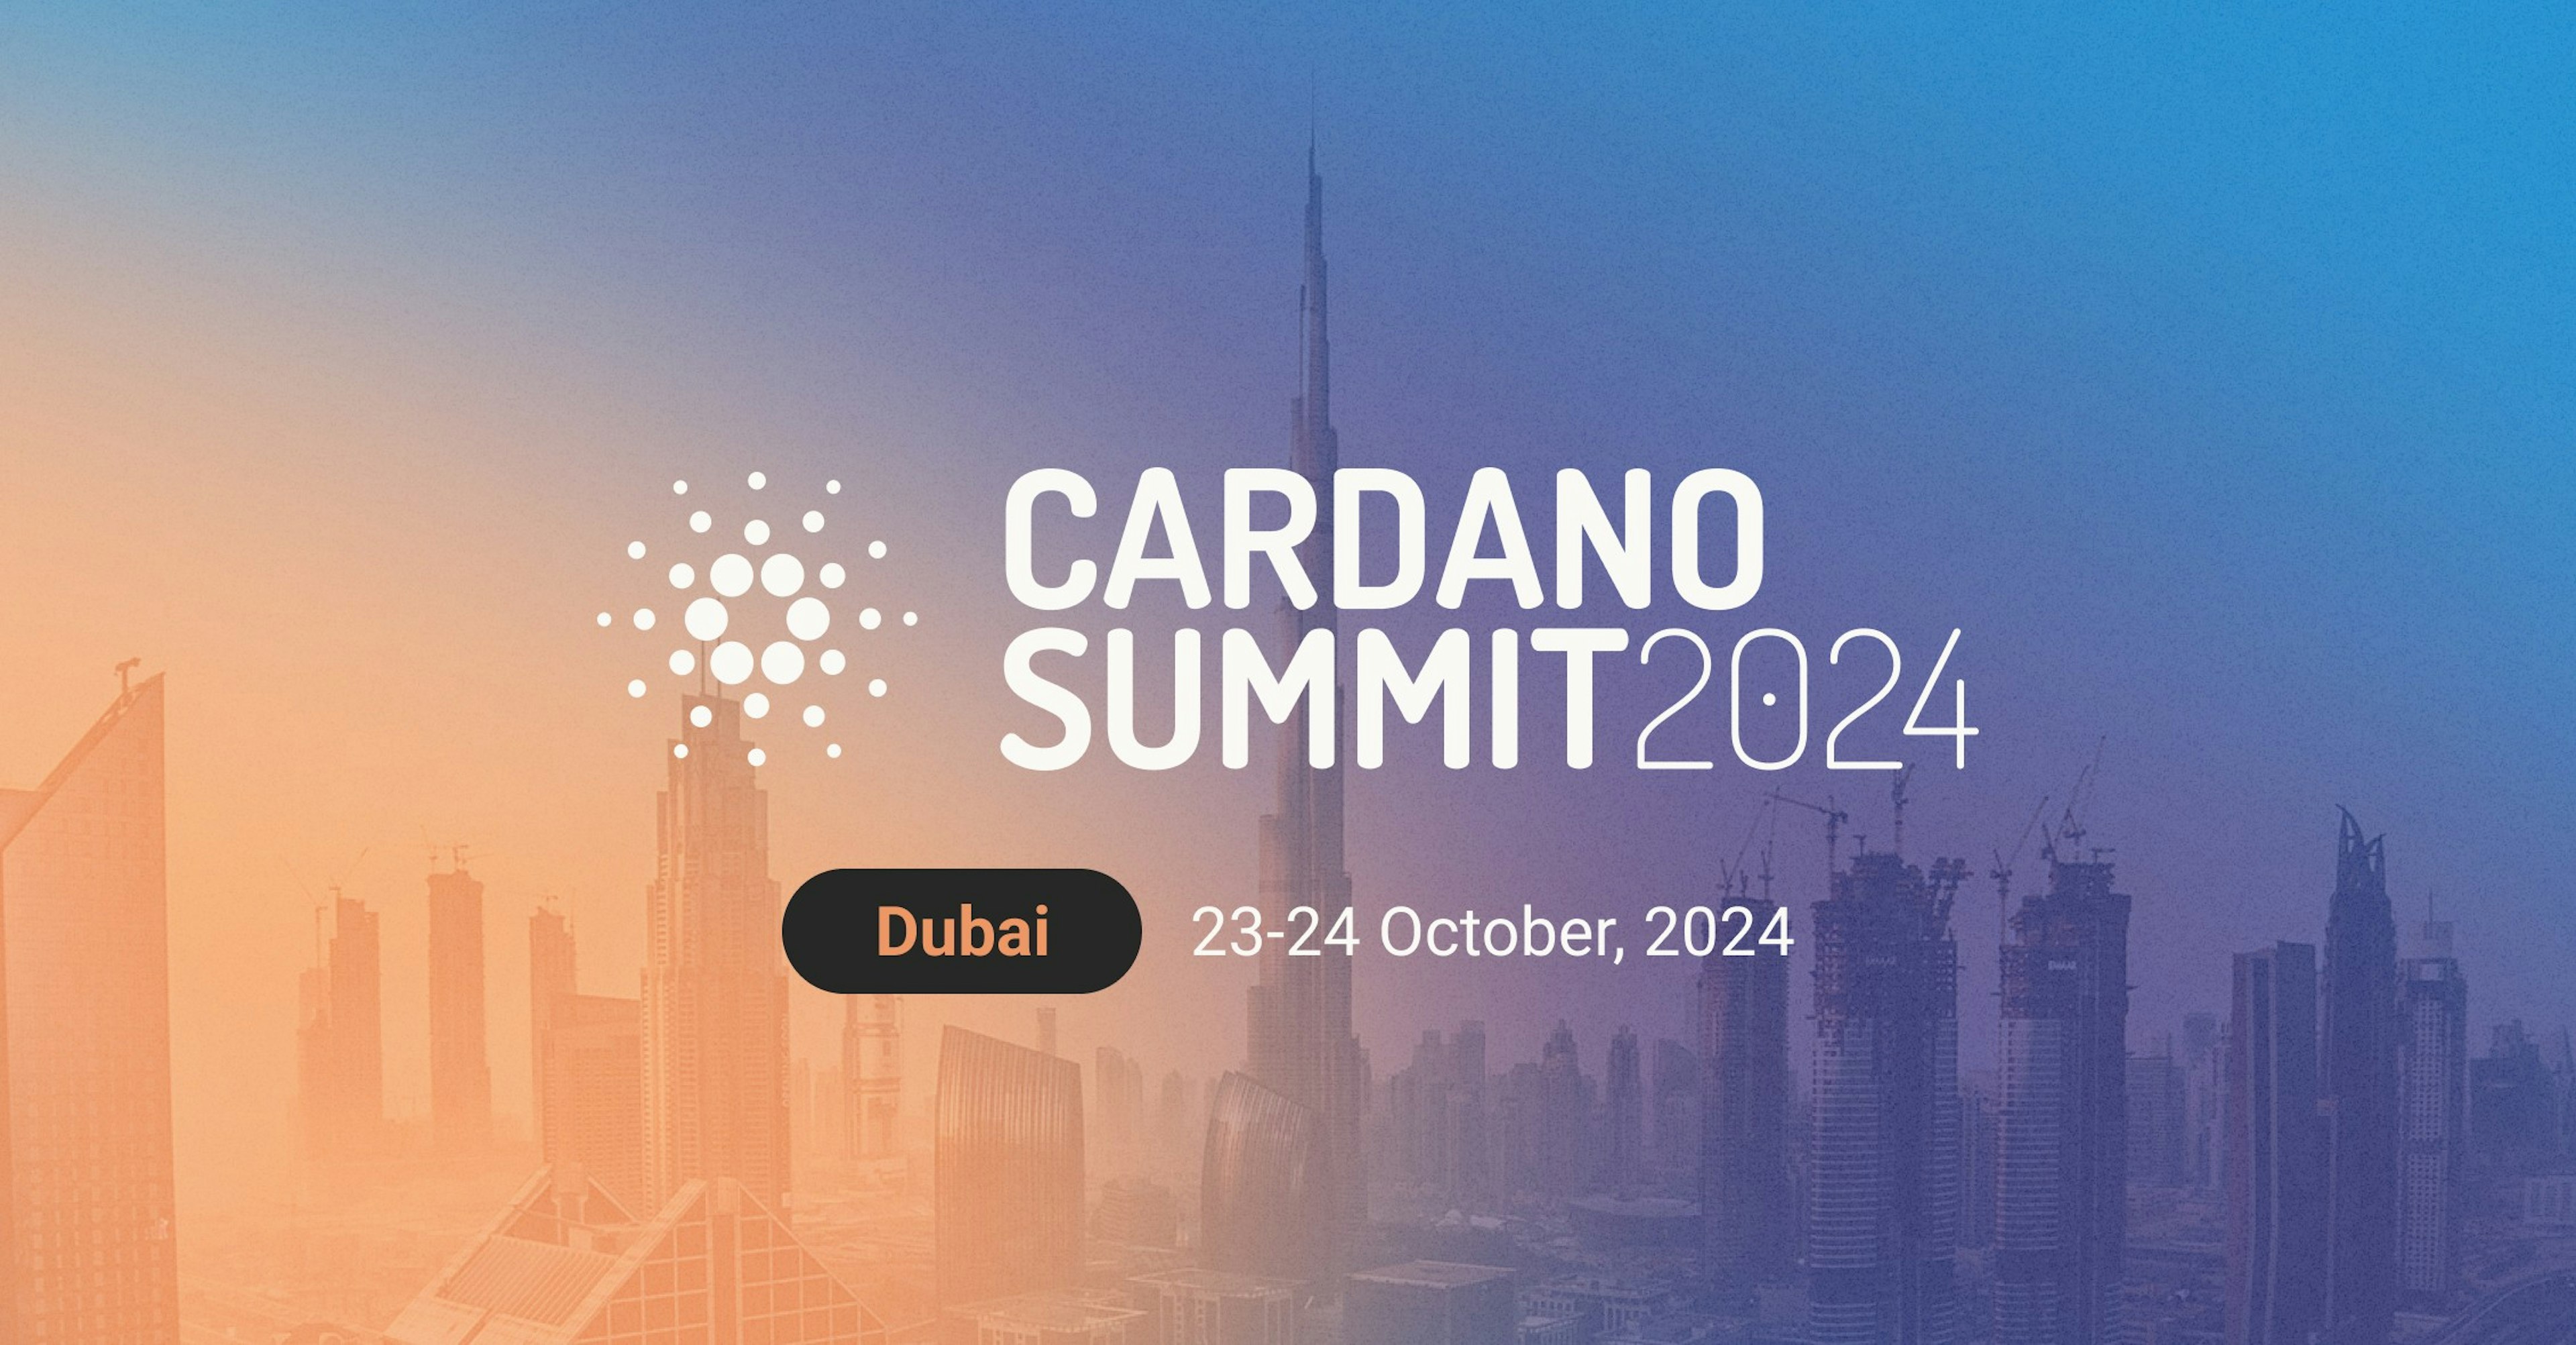 Cardano Summit 2024 - Dubai - 23-24 October